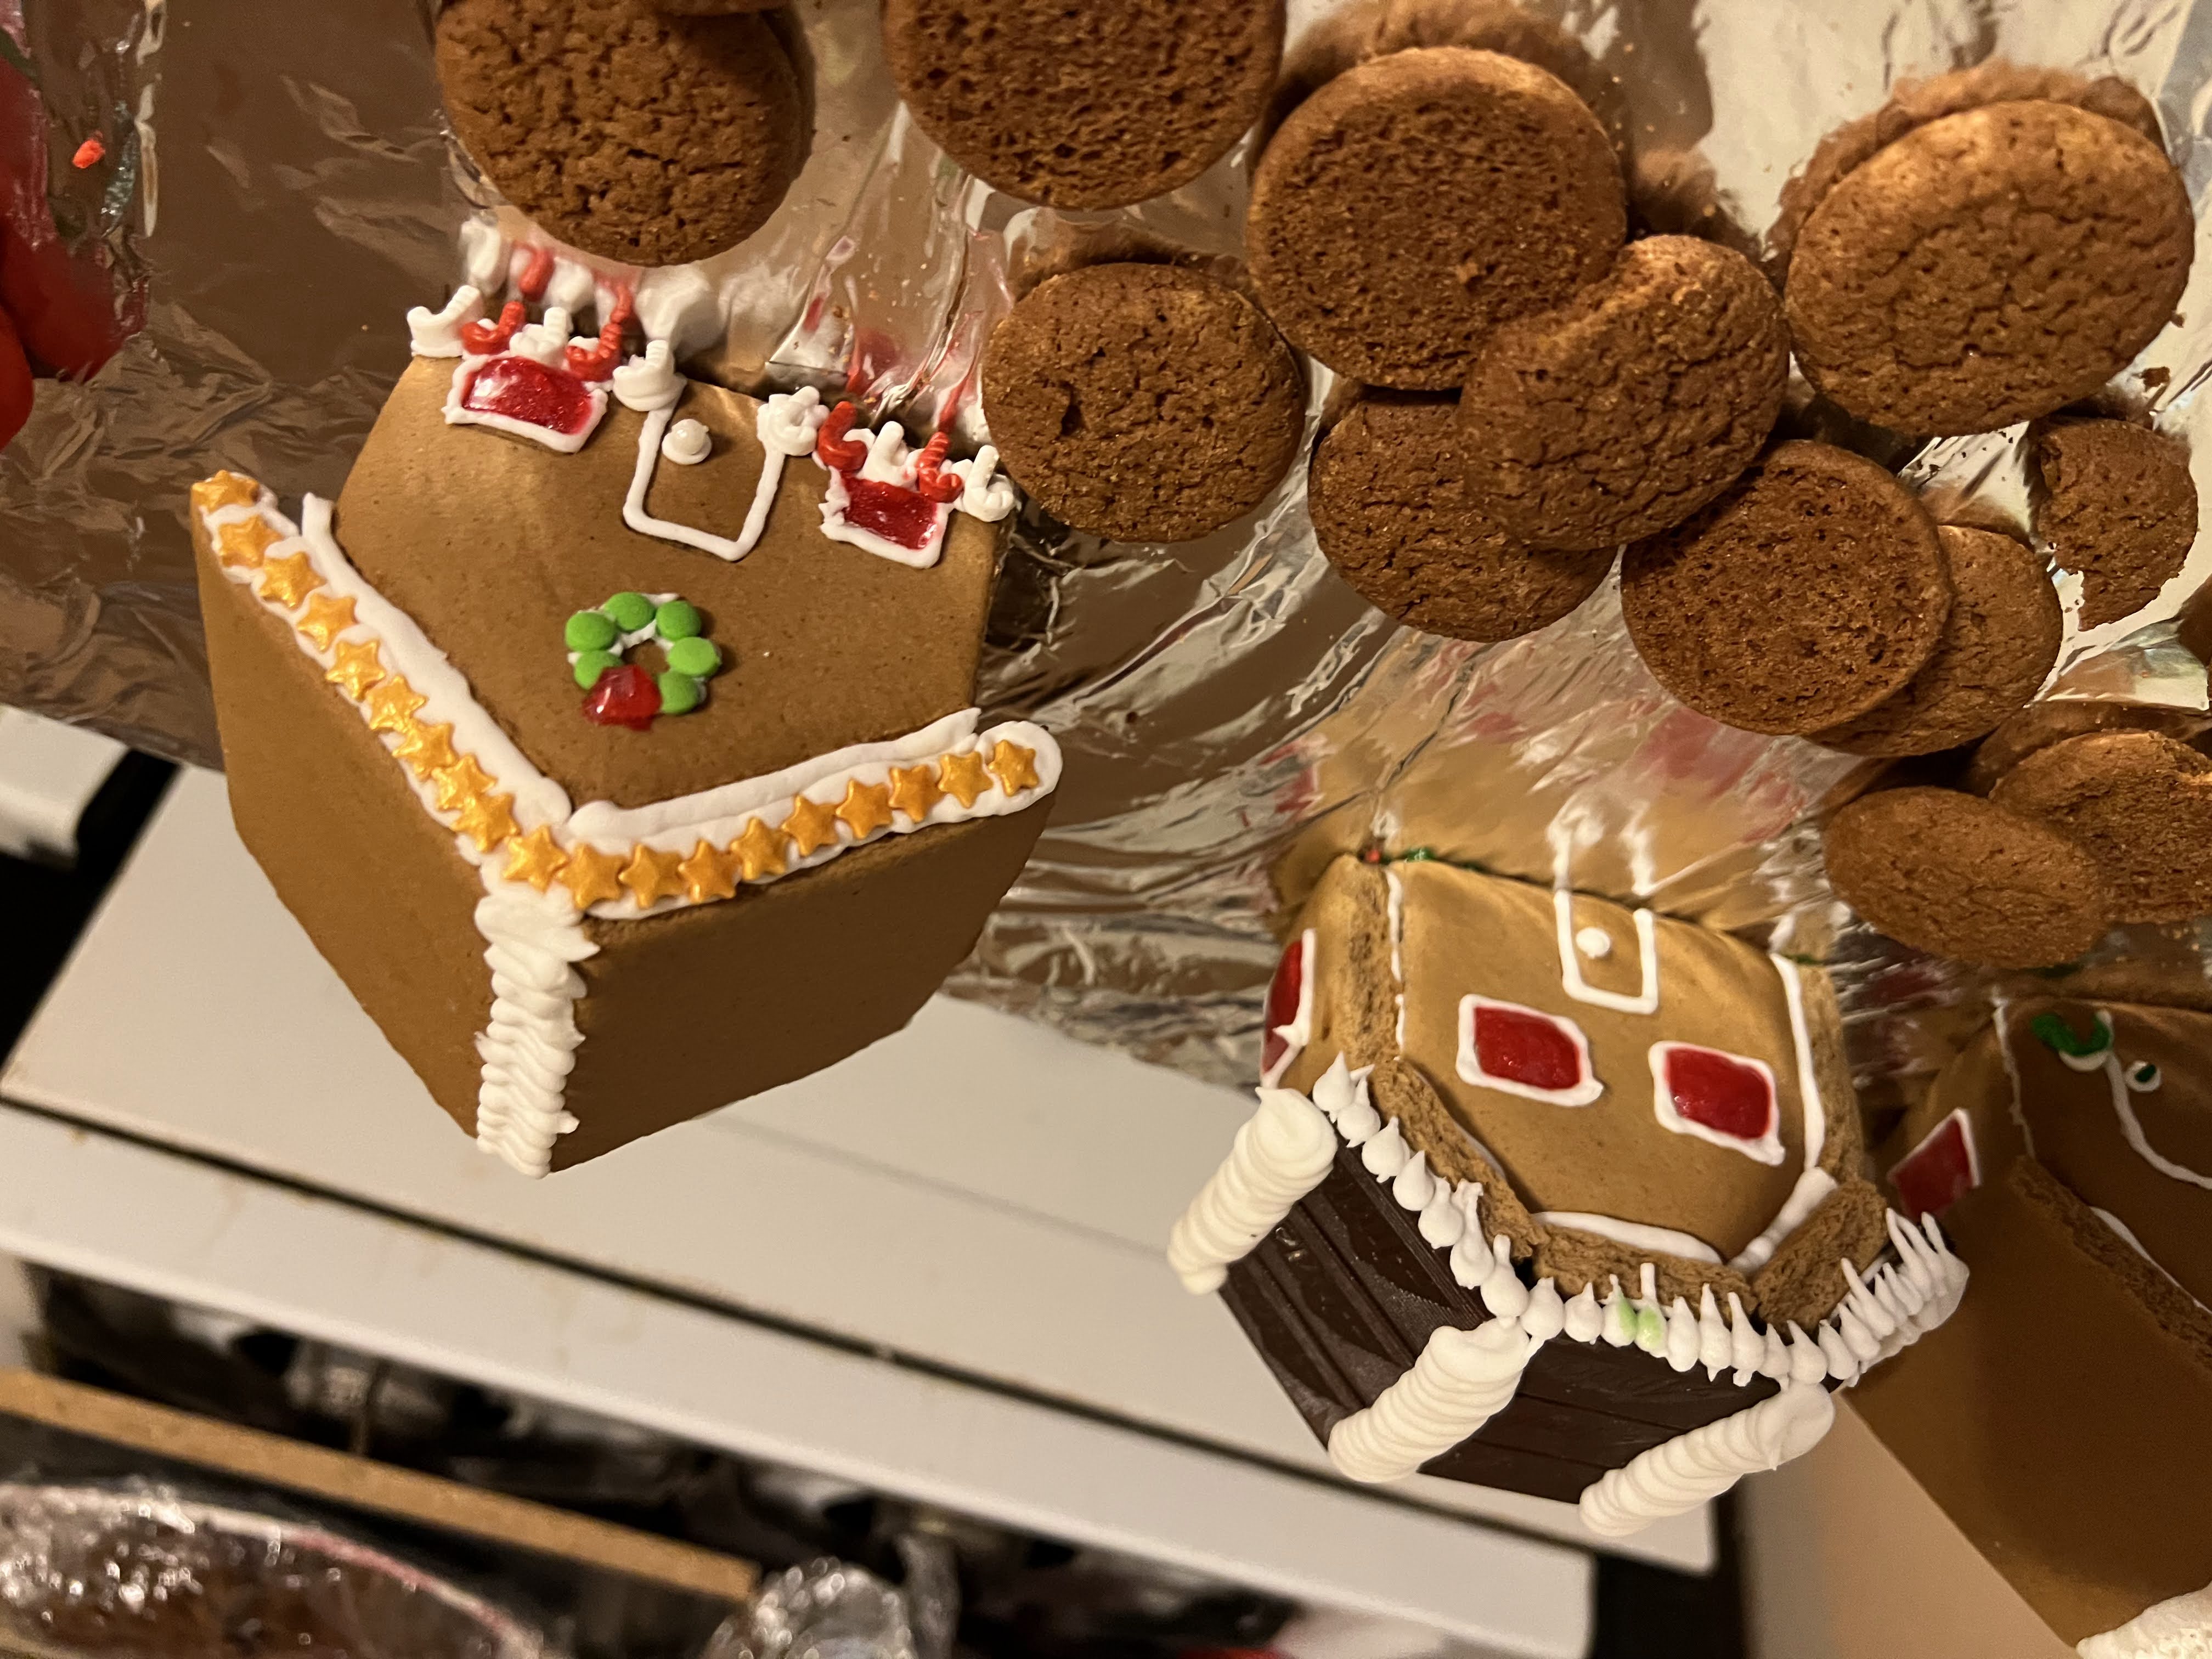 Gingerbread Houses
(Made by Kittara Foxworthy)